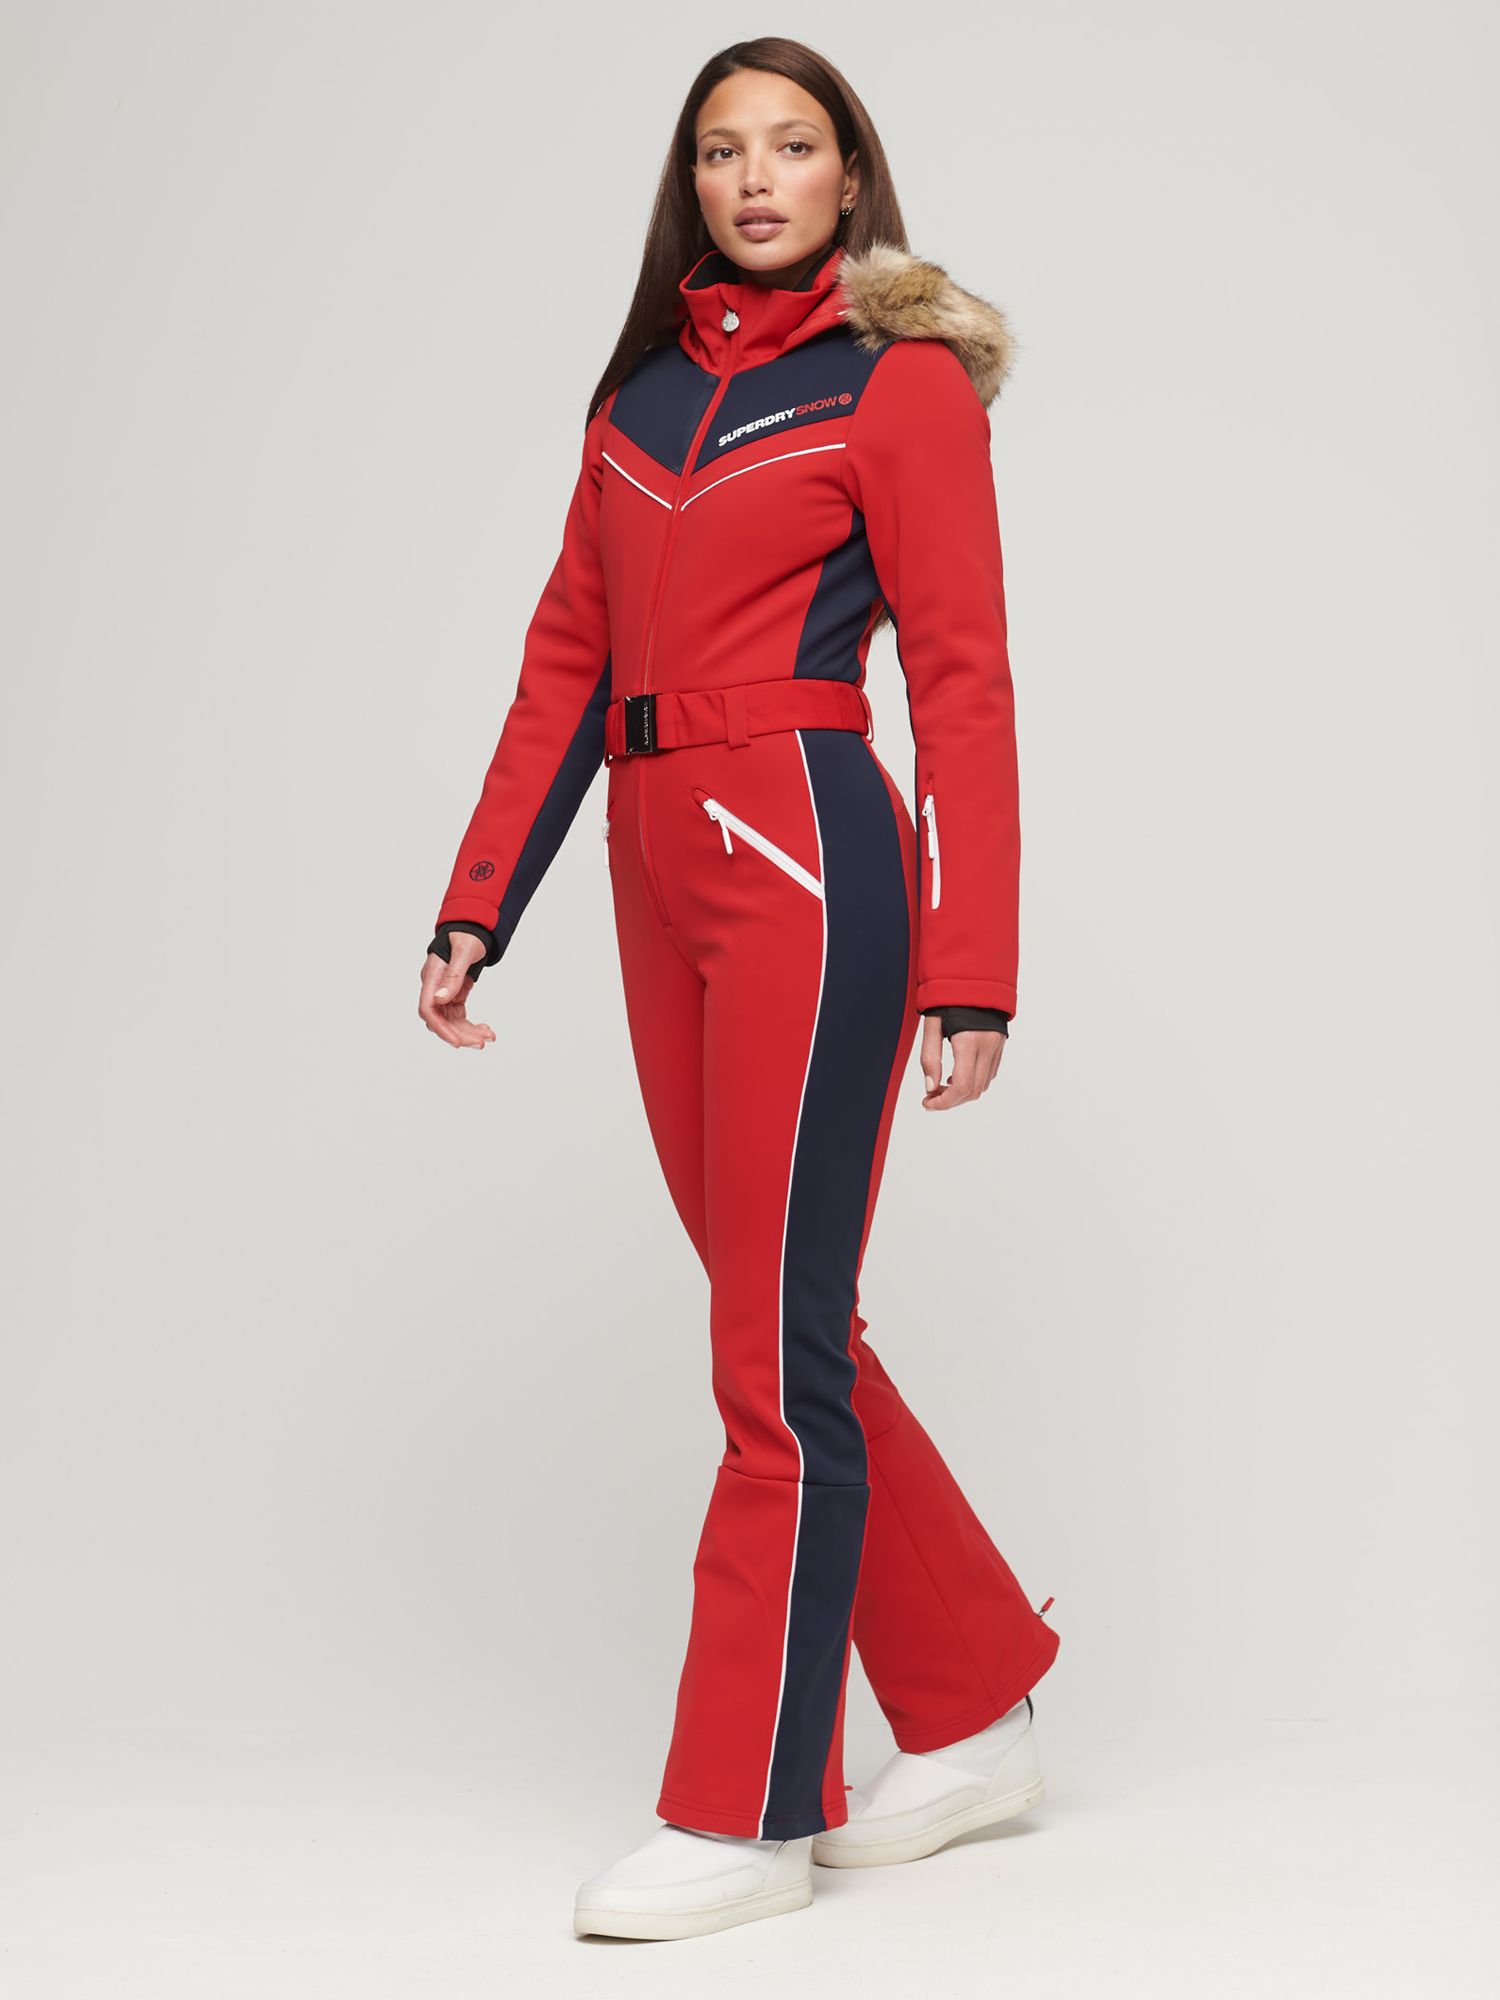 Superdry Women's Ski Suit, Hike Red at John Lewis & Partners